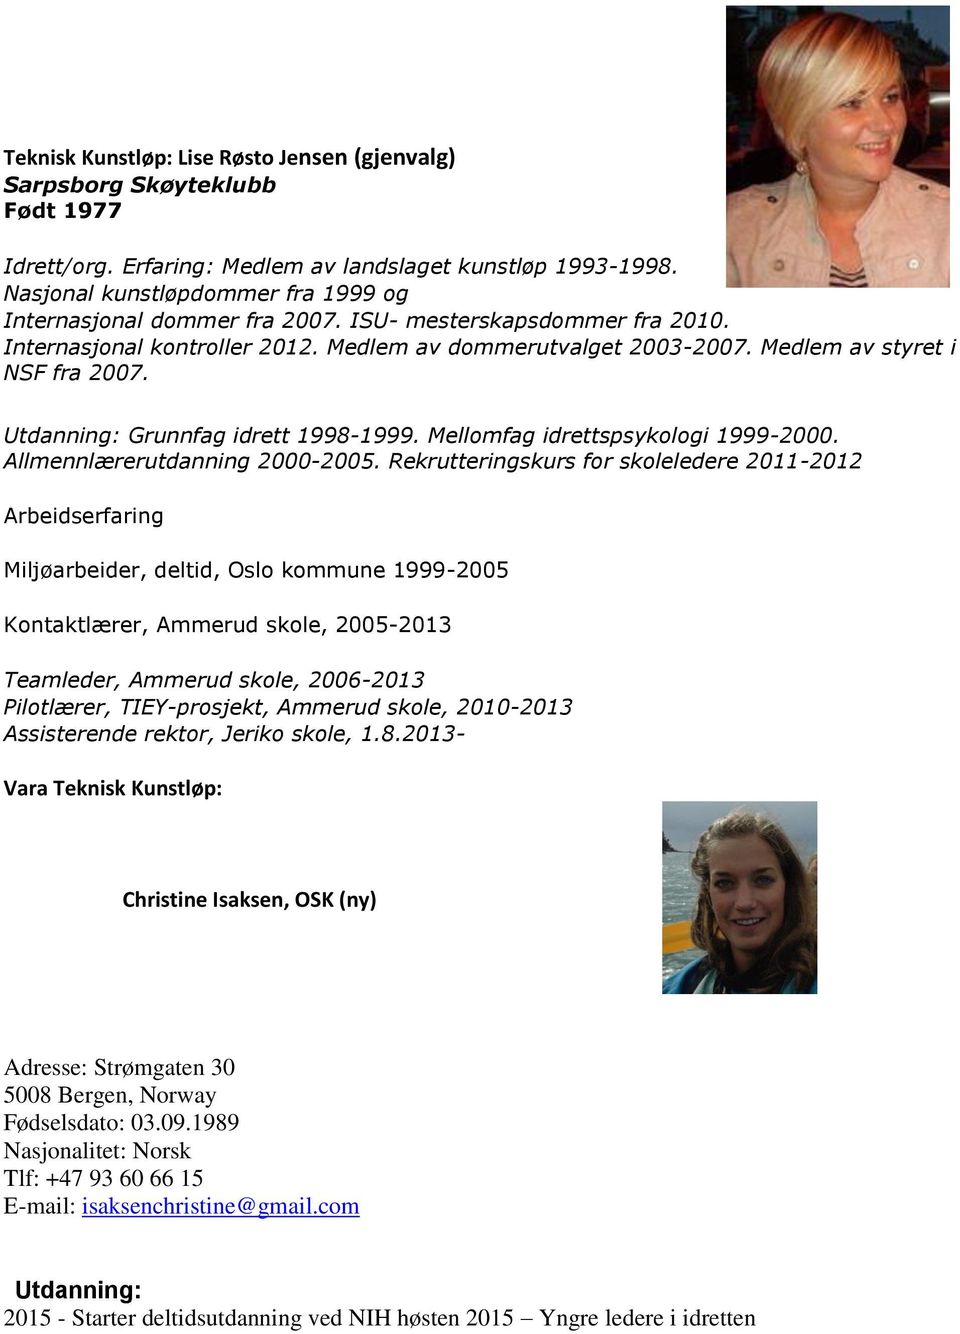 Utdanning: Grunnfag idrett 1998-1999. Mellomfag idrettspsykologi 1999-2000. Allmennlærerutdanning 2000-2005.